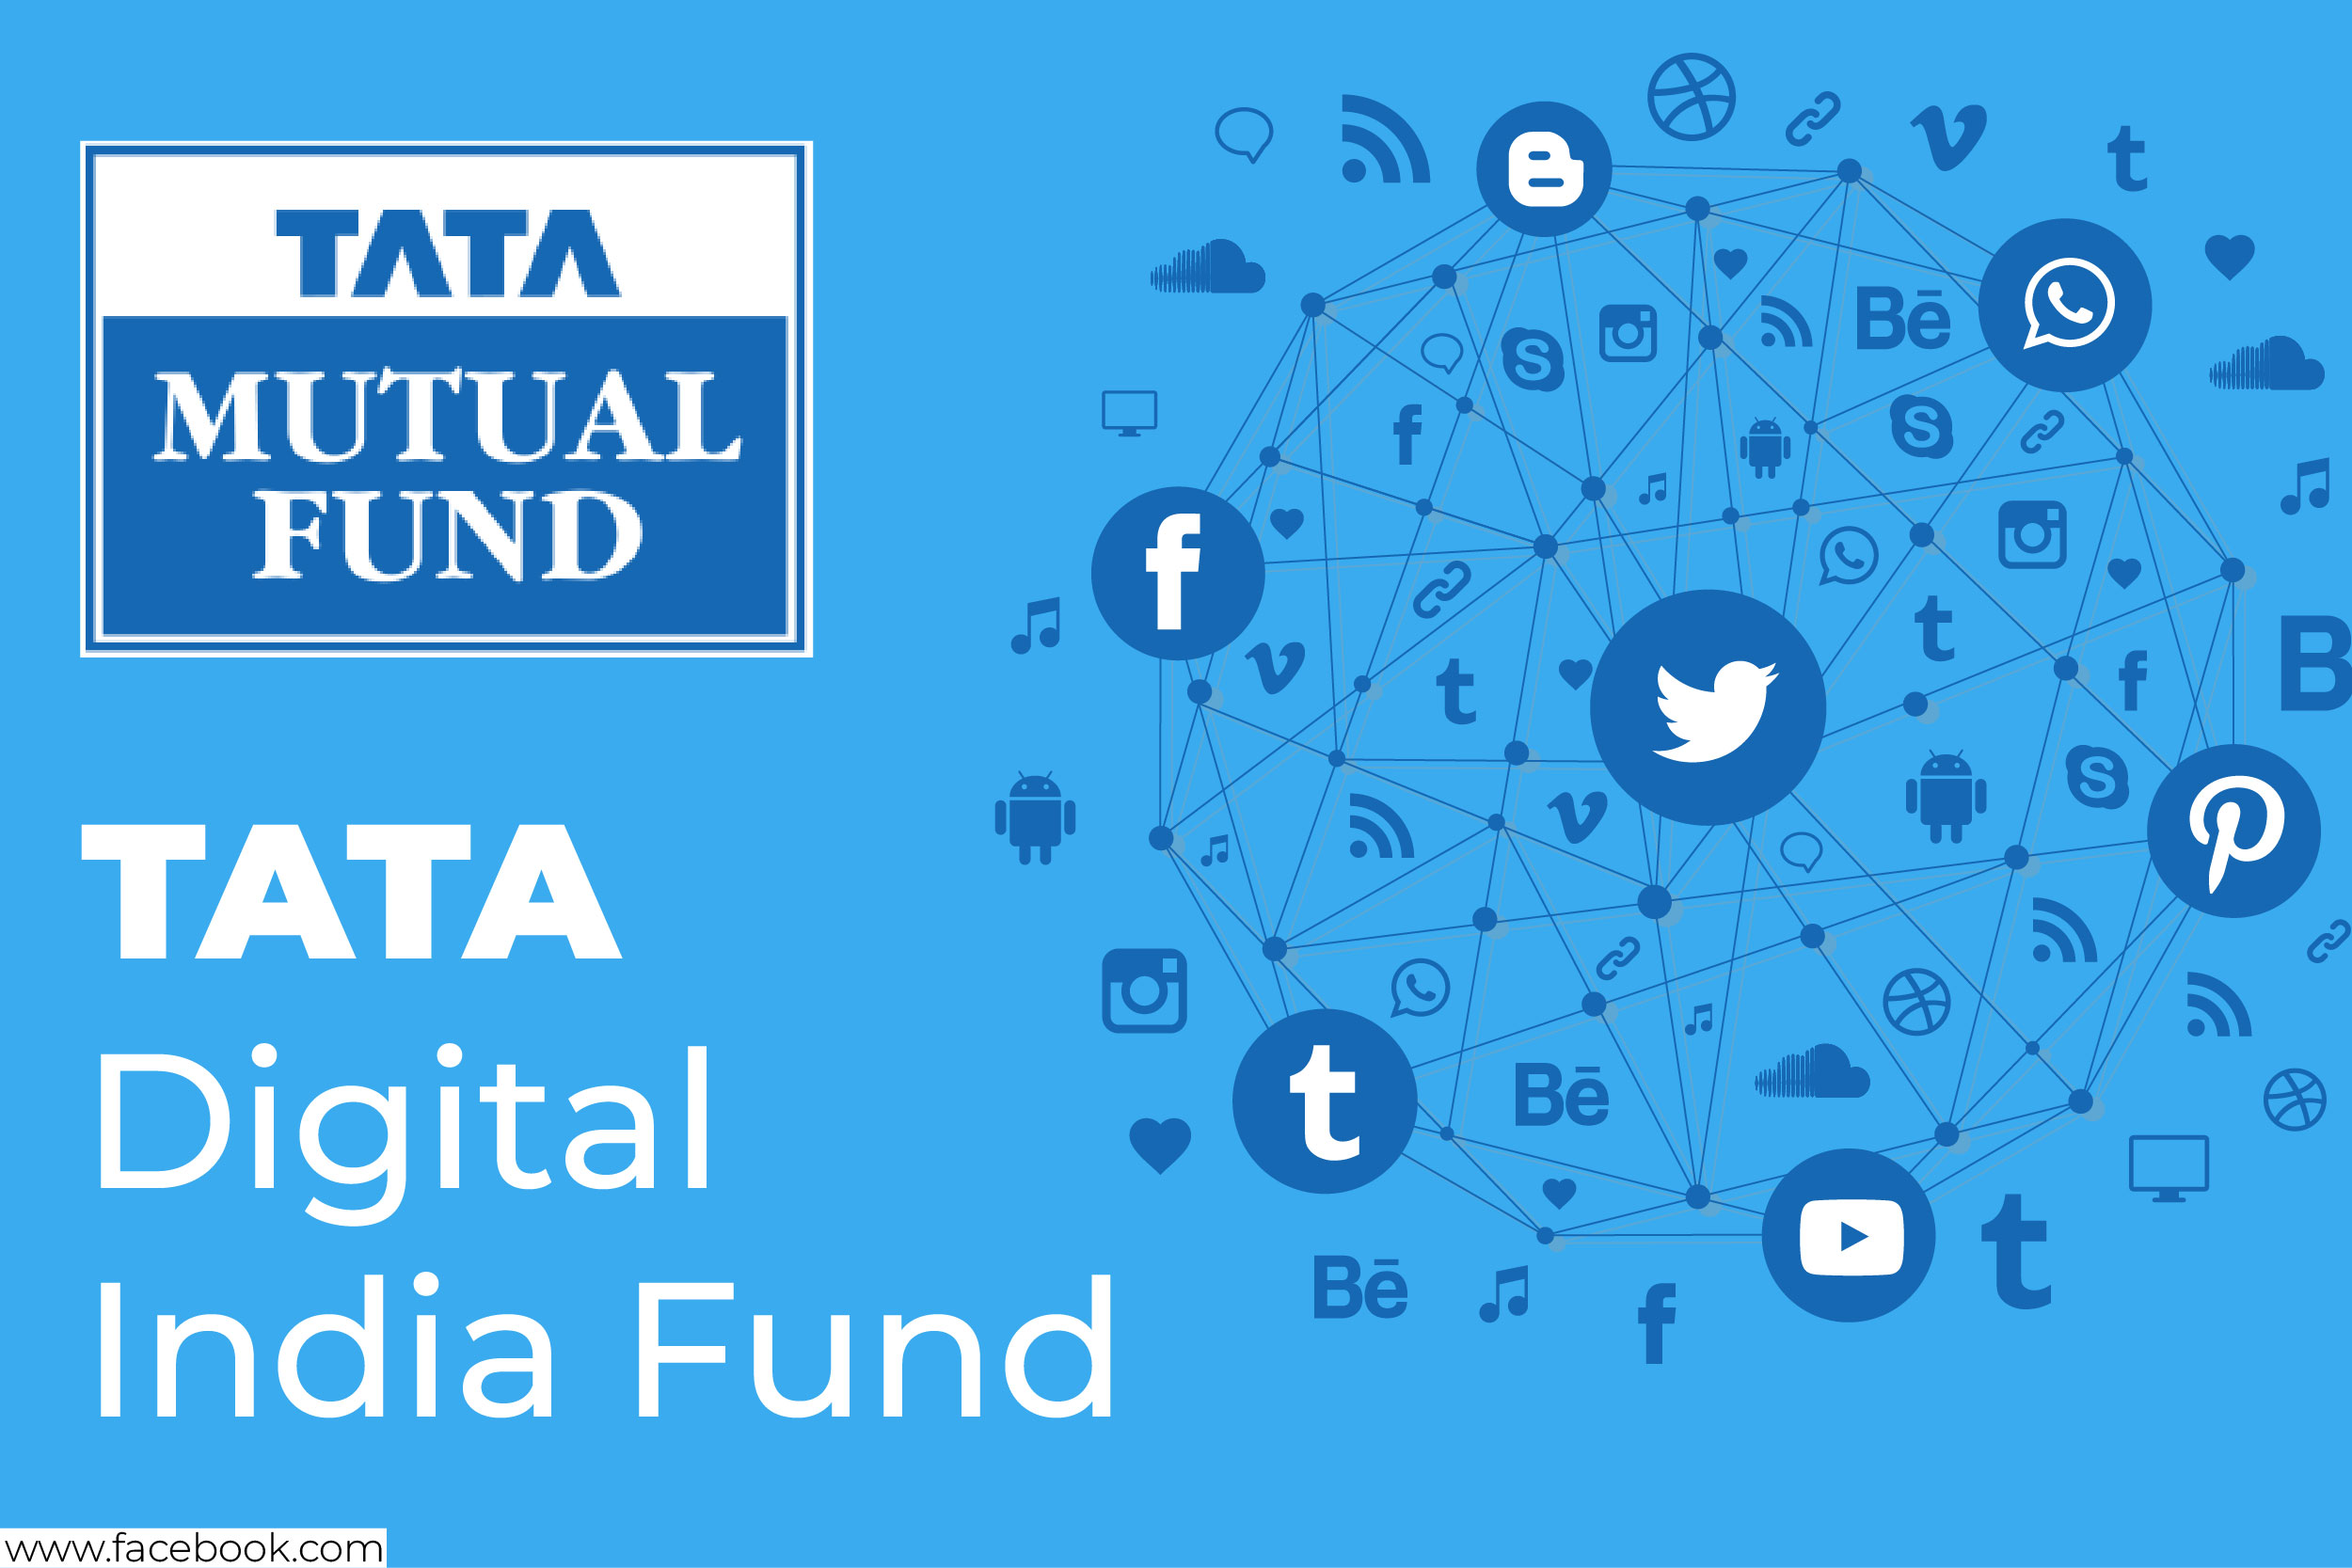 TATA Digital India Fund